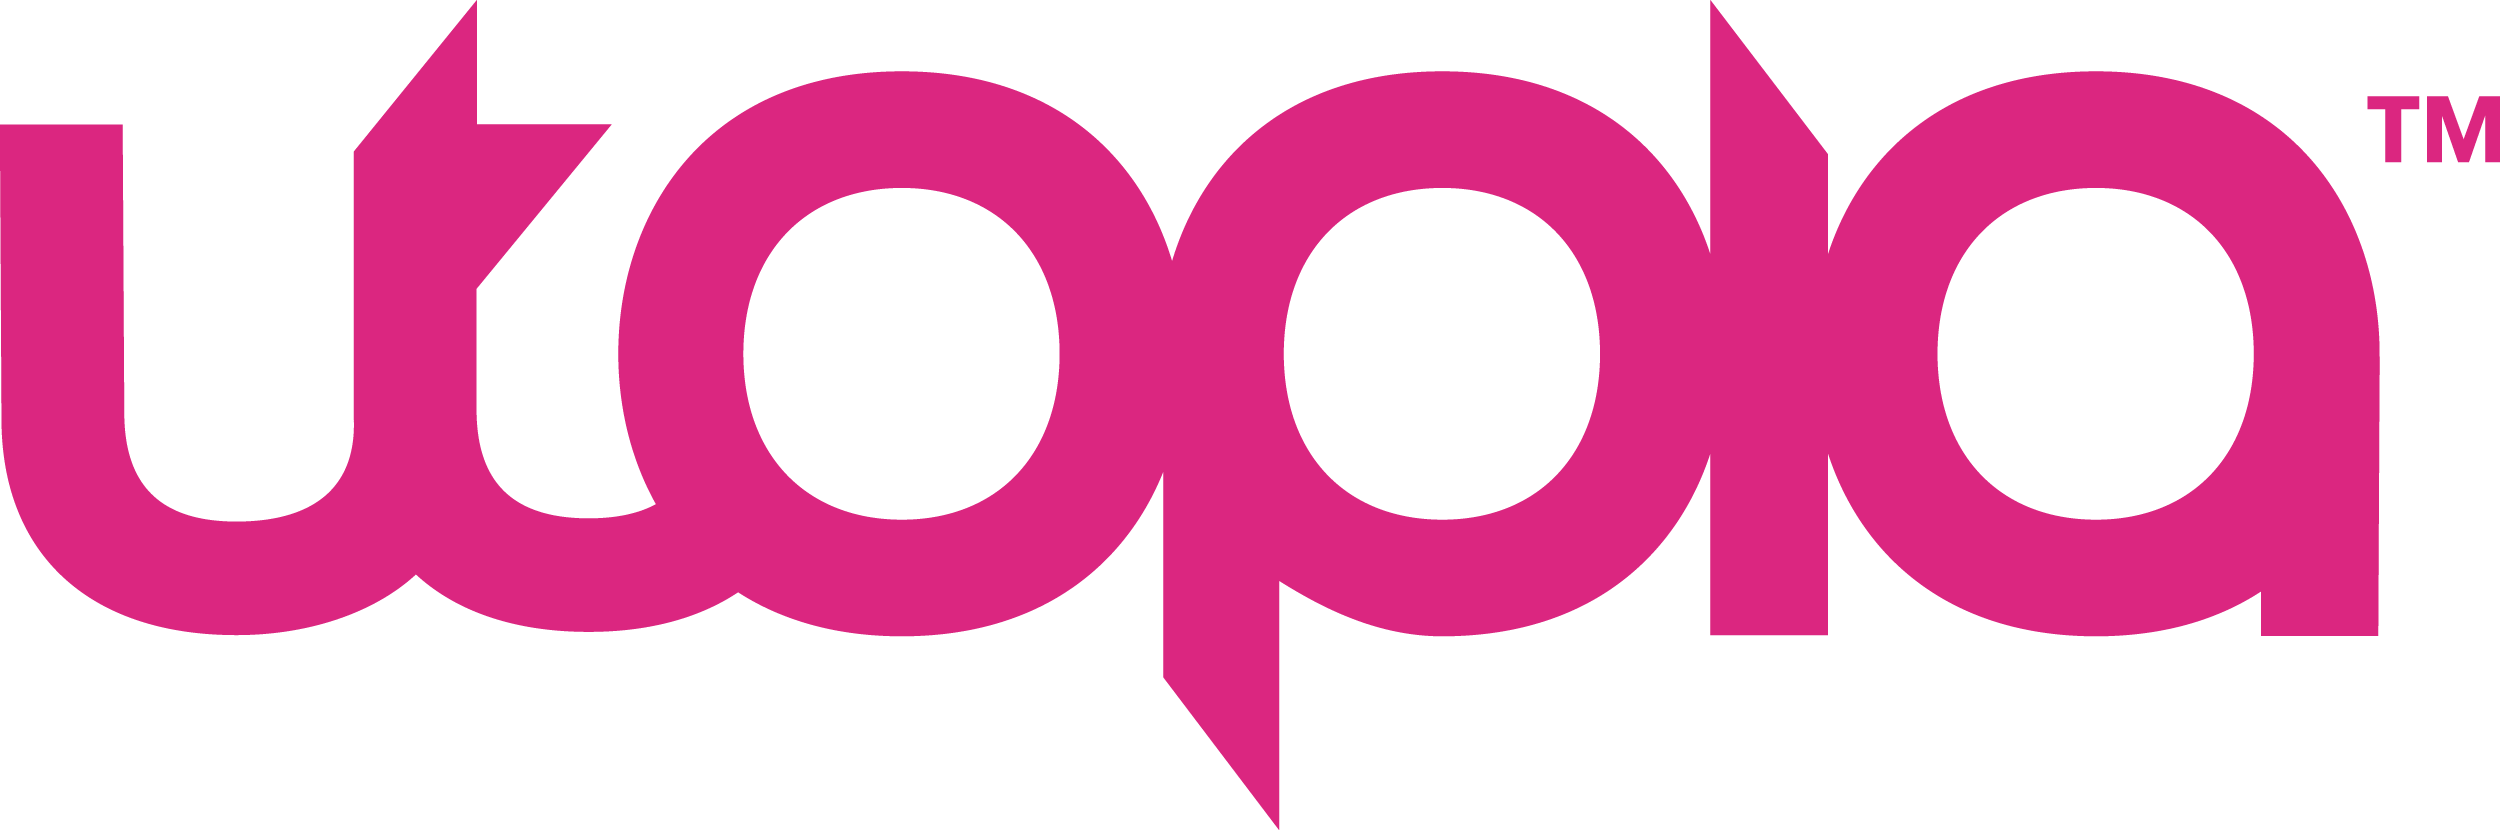 utopia logo